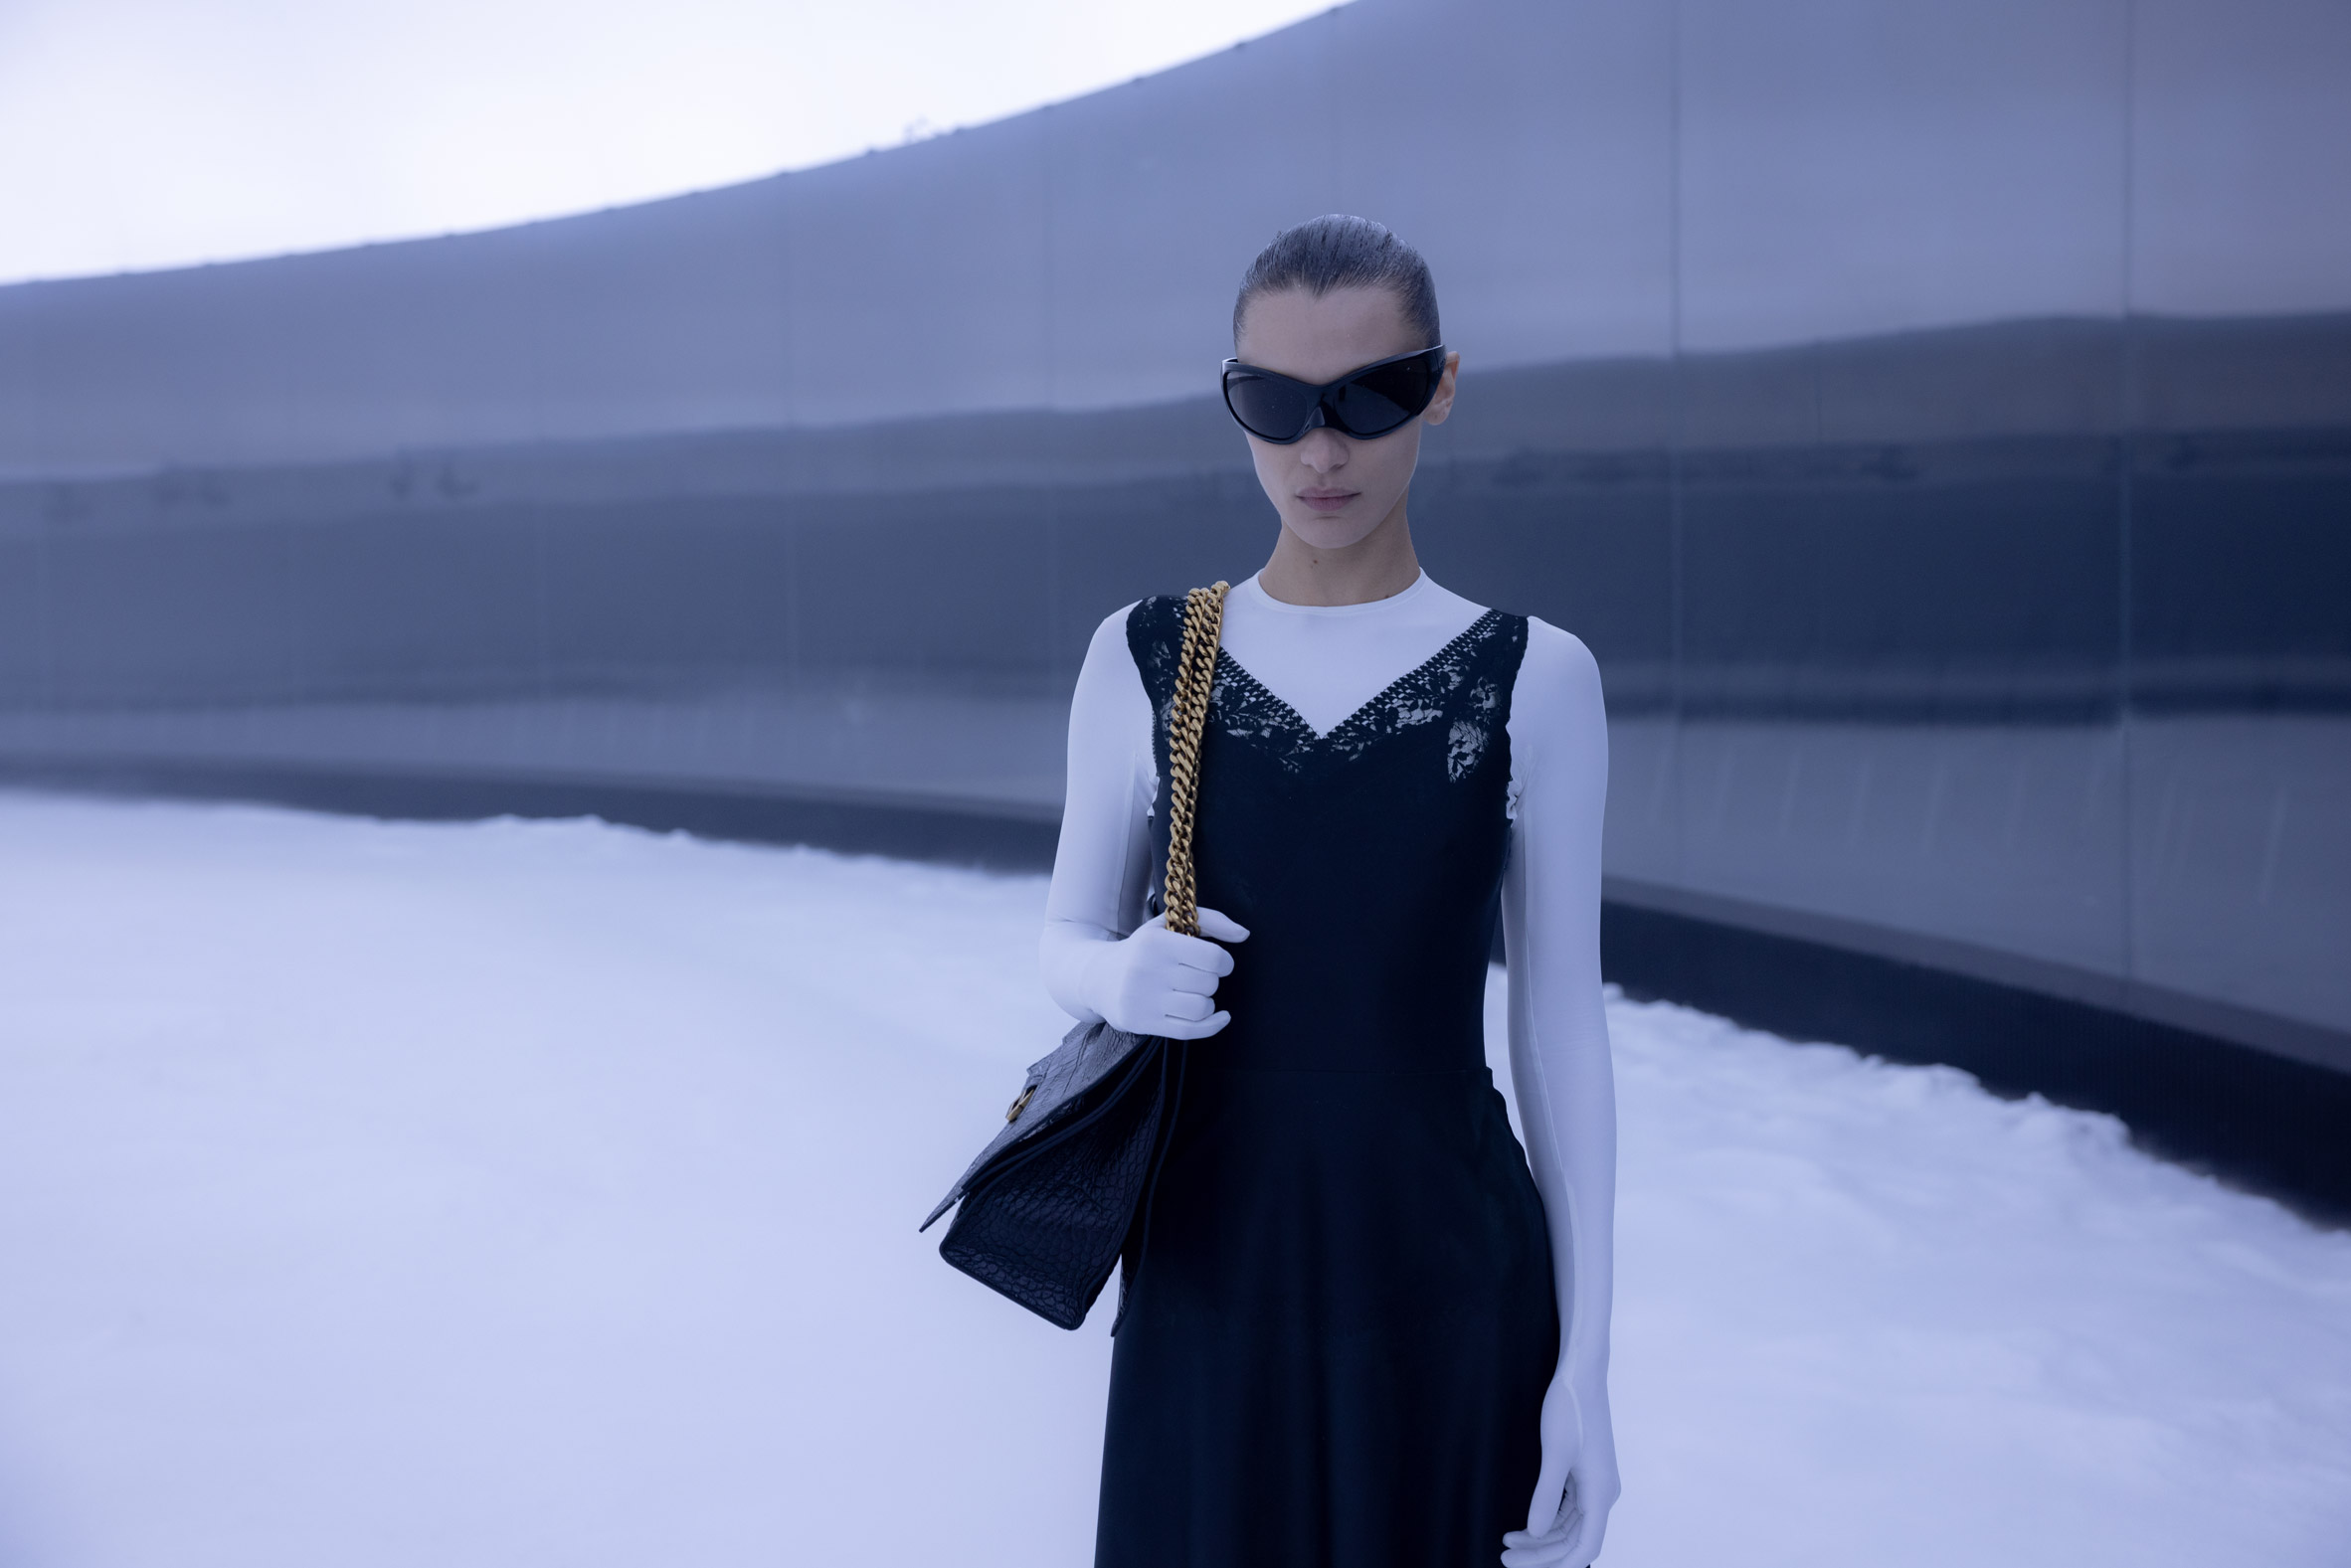 Balenciaga dedicates fashion show to climate crisis and war in Ukraine